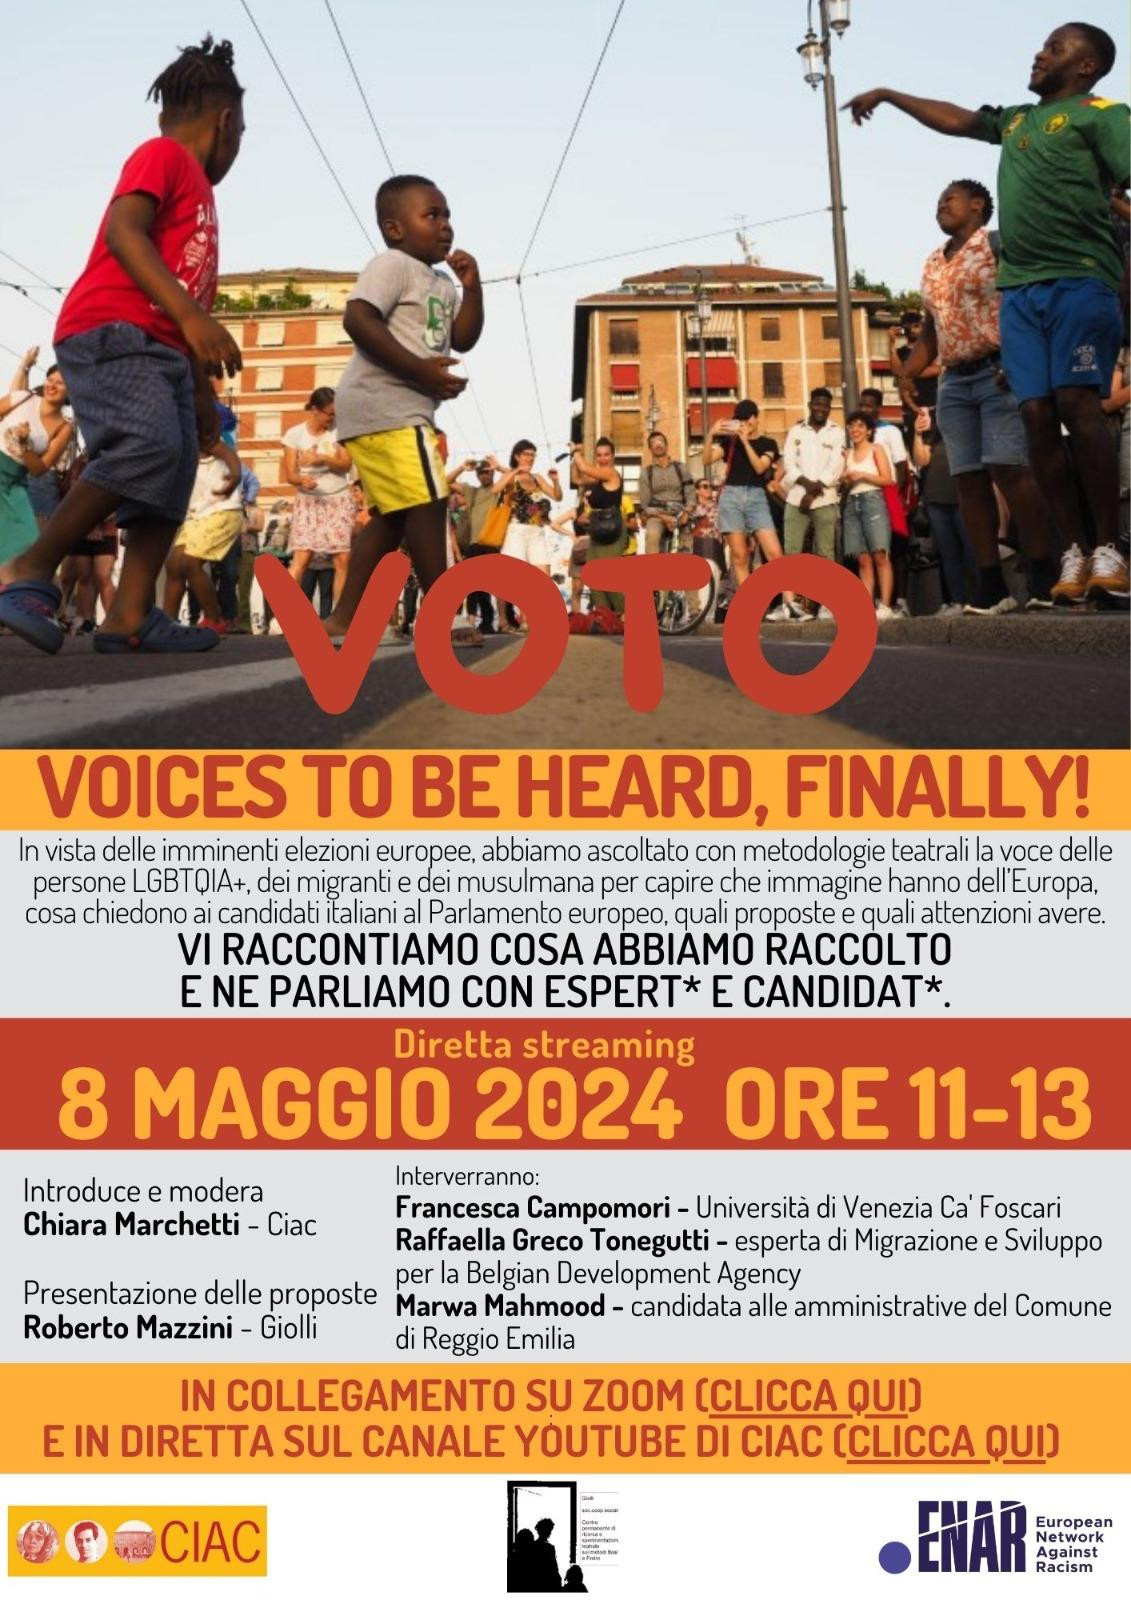 VoTo - Voices to be heard, finally!